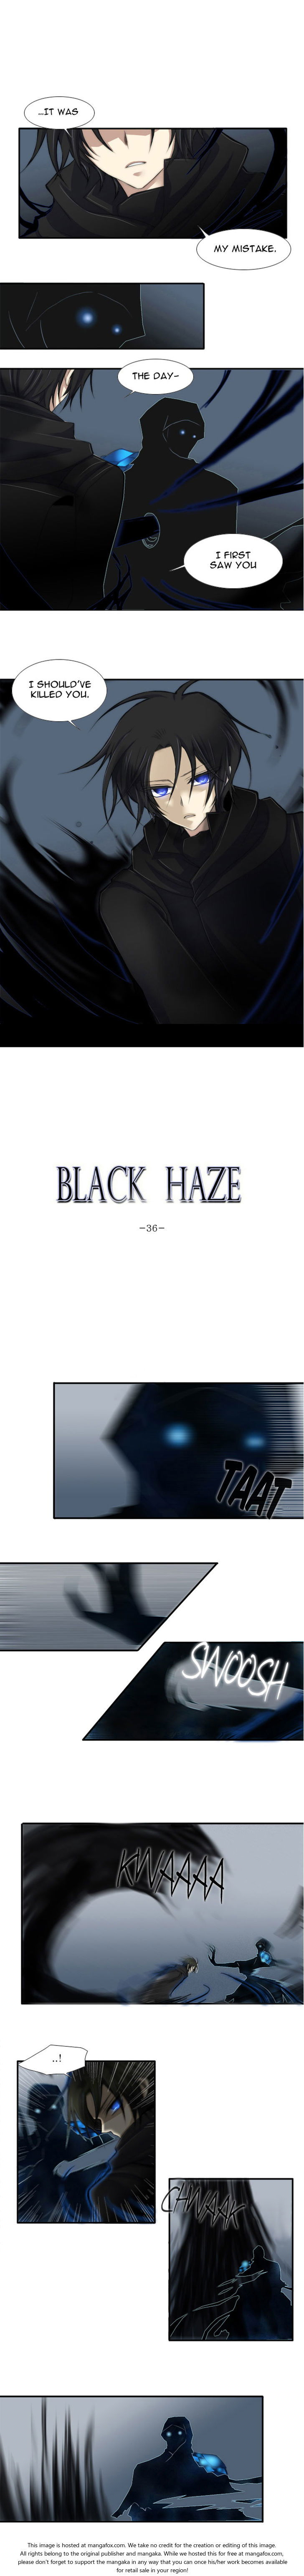 Black Haze Chapter 036 page 2